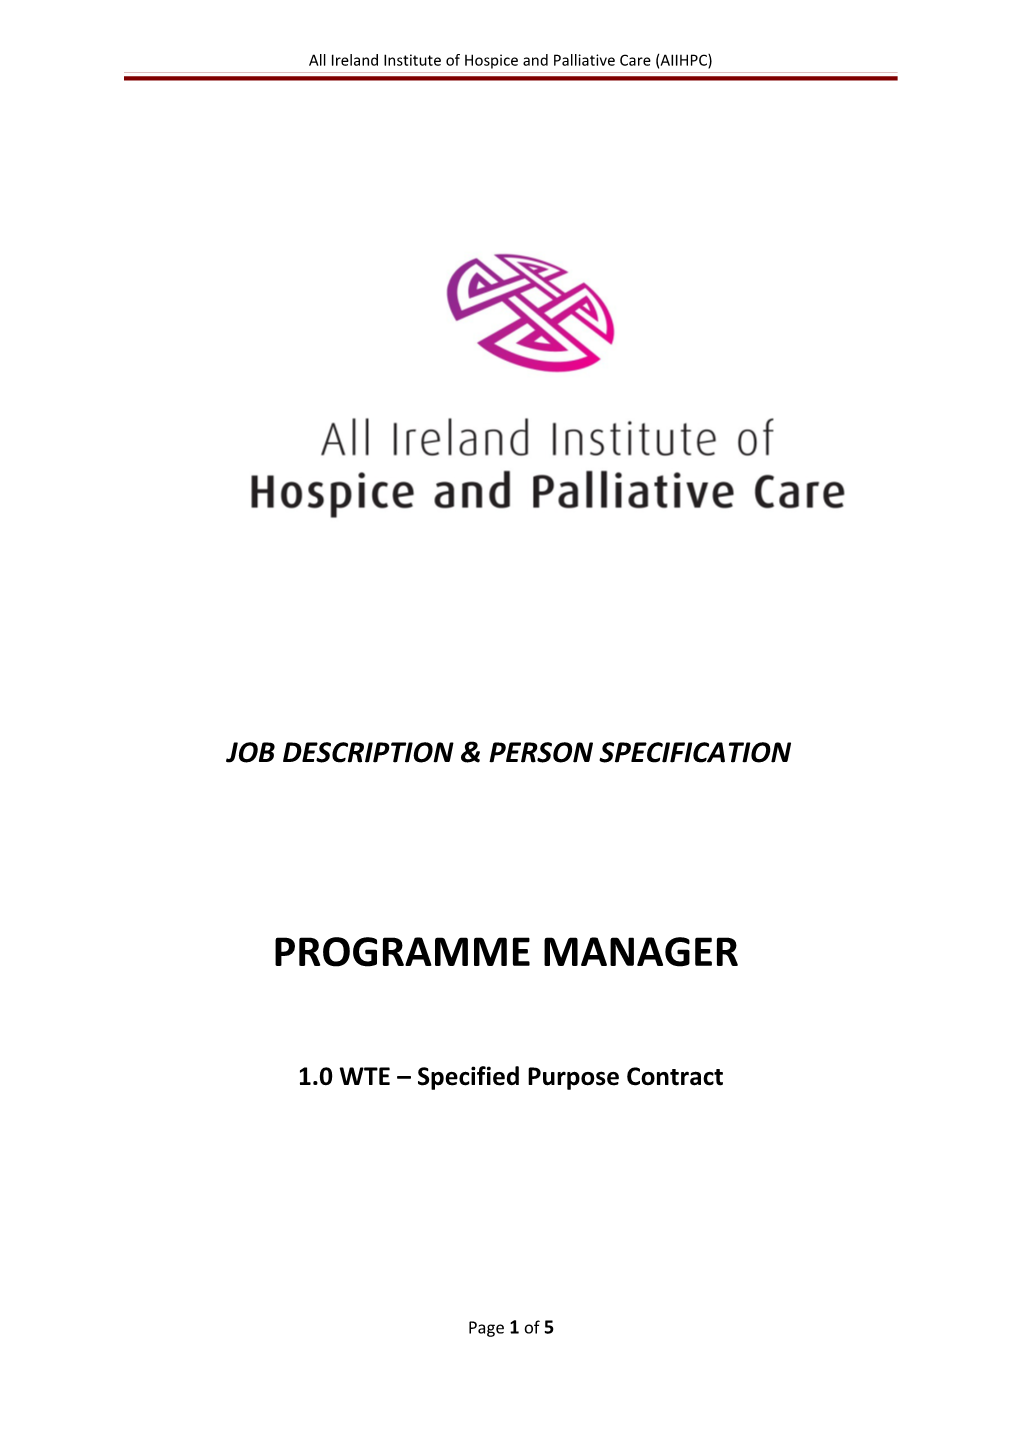 All Ireland Institute of Hospice and Palliative Care